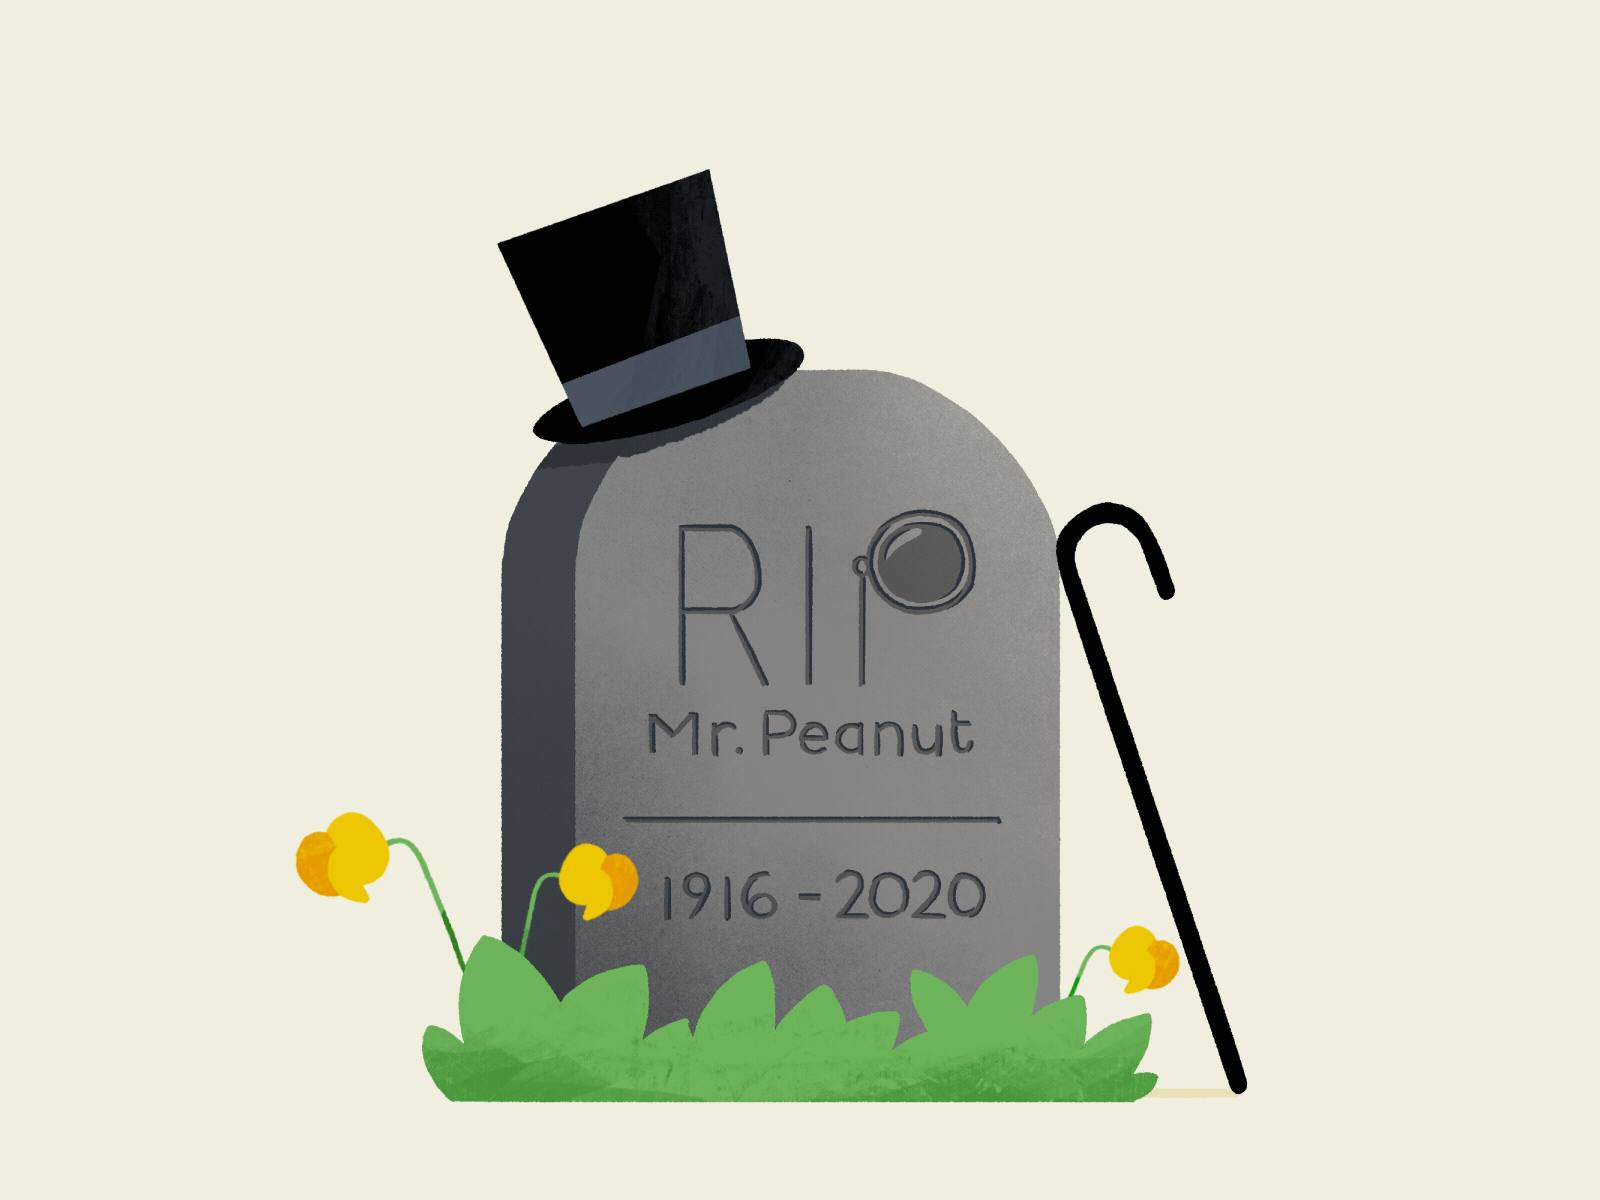 RIP Mr Peanut